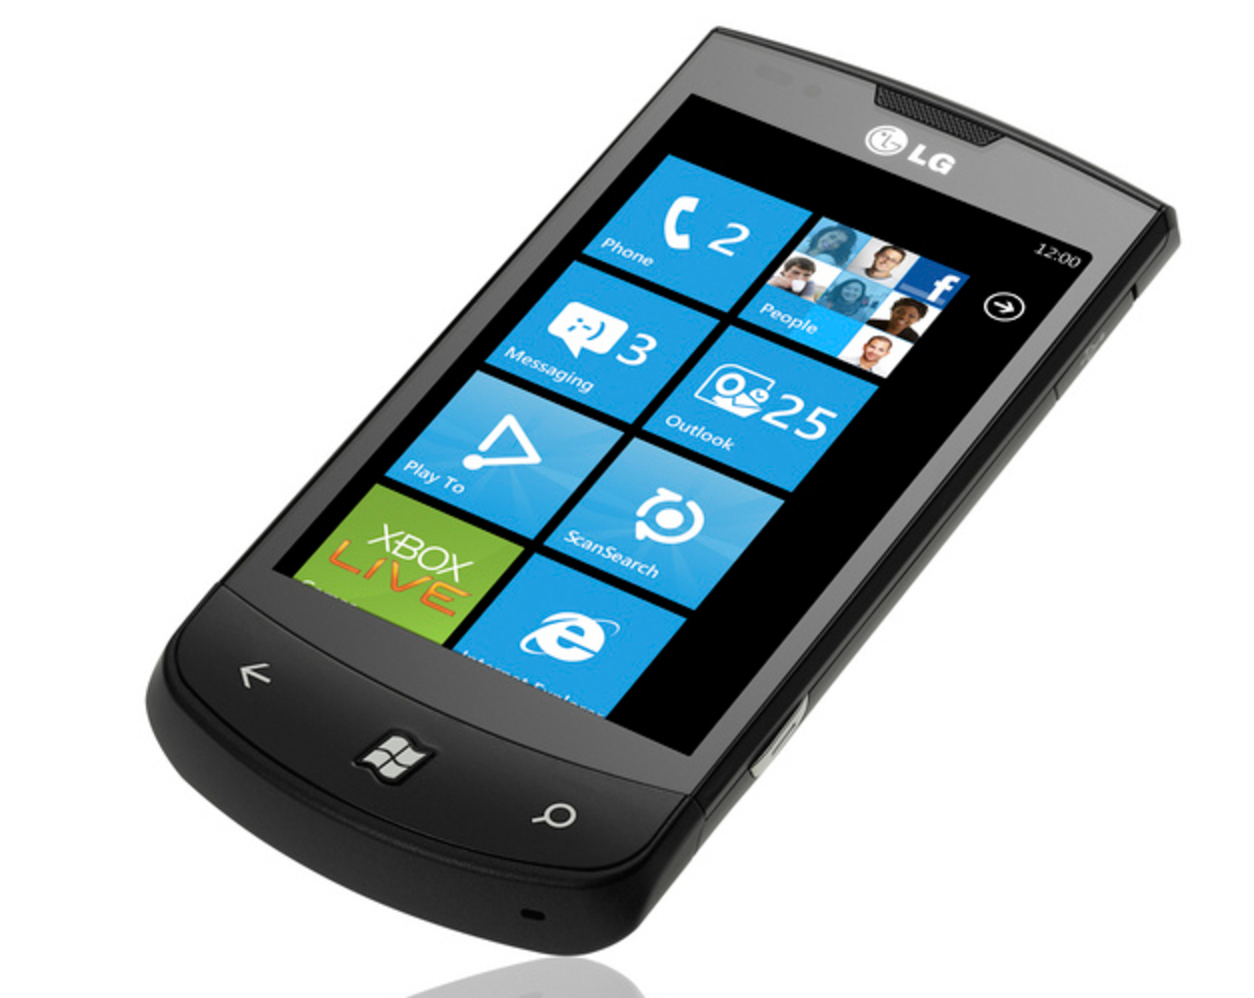 Windows Phone 7 Hardware Revealed: The Rundown - Tested